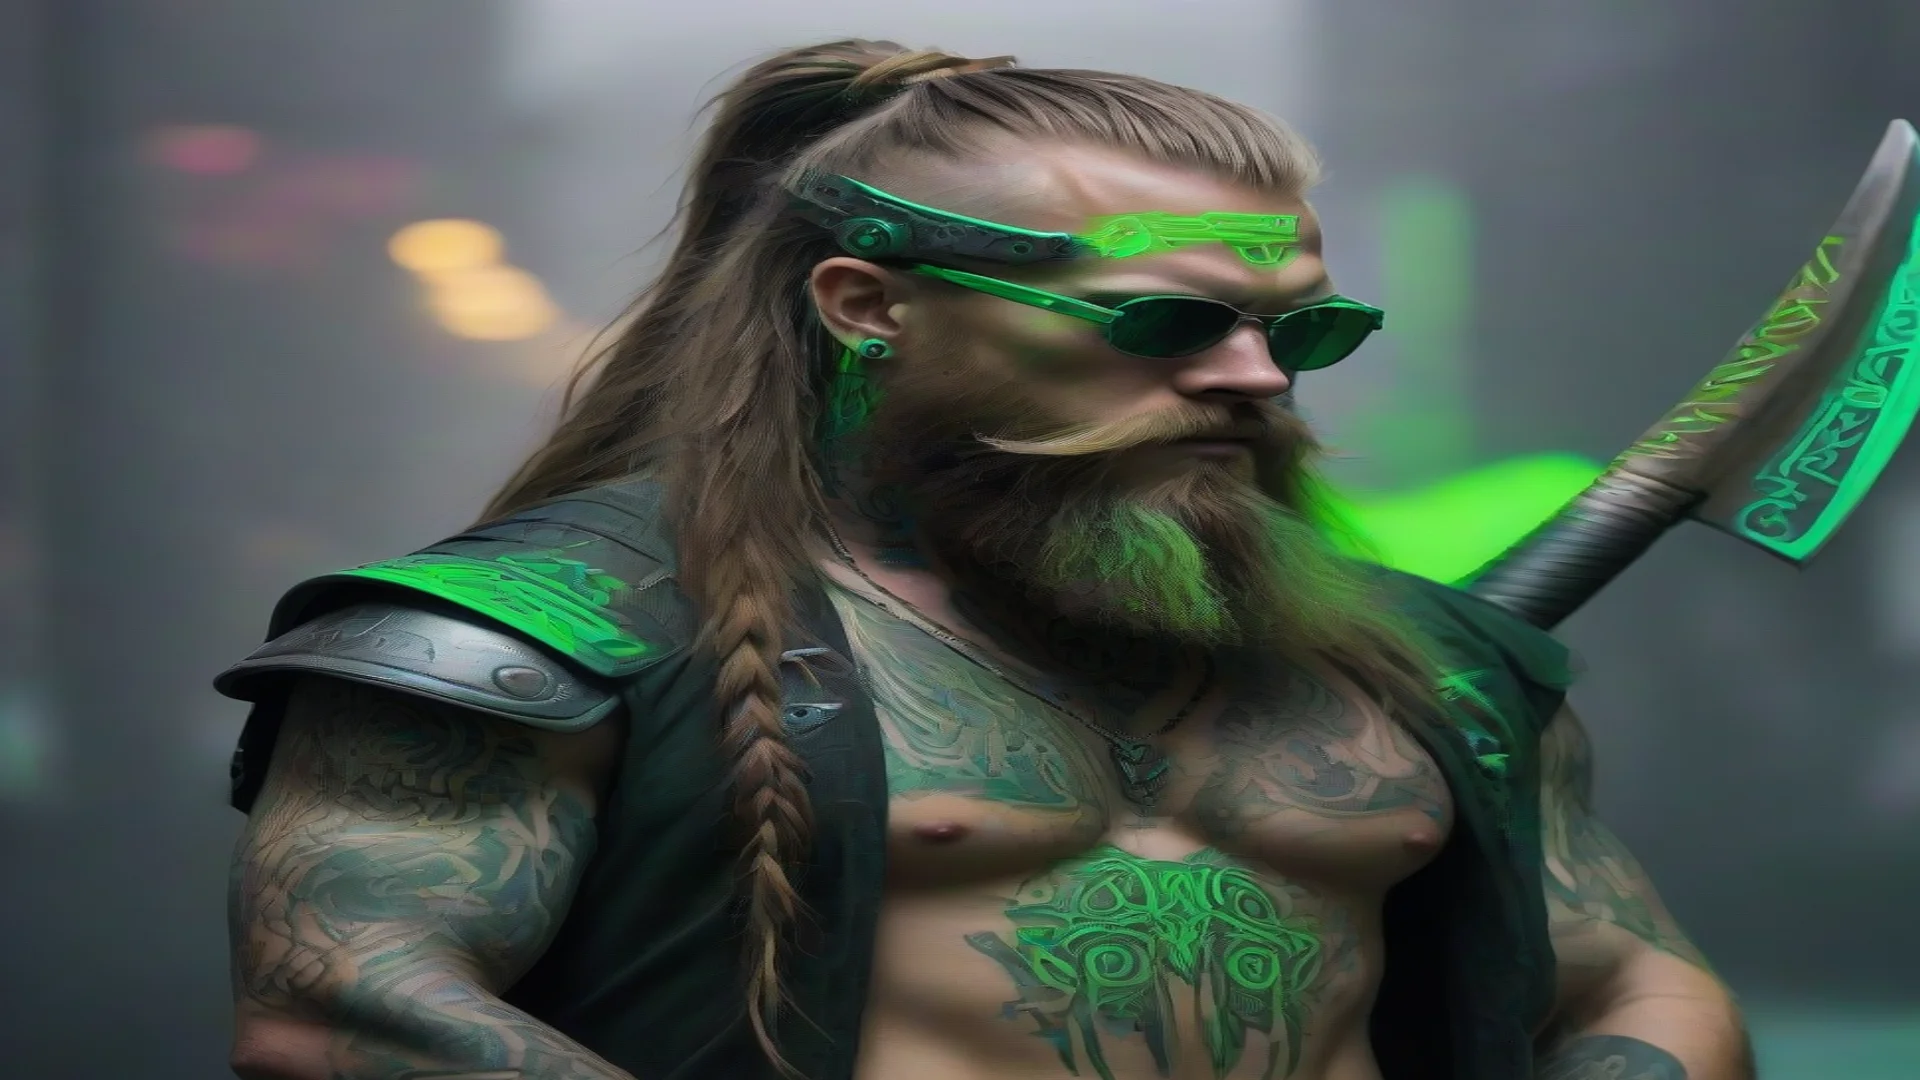 aiamazing neon tattooed cyberpunk viking double axe wild beard long hair matrix green awesome portrait 2 wide